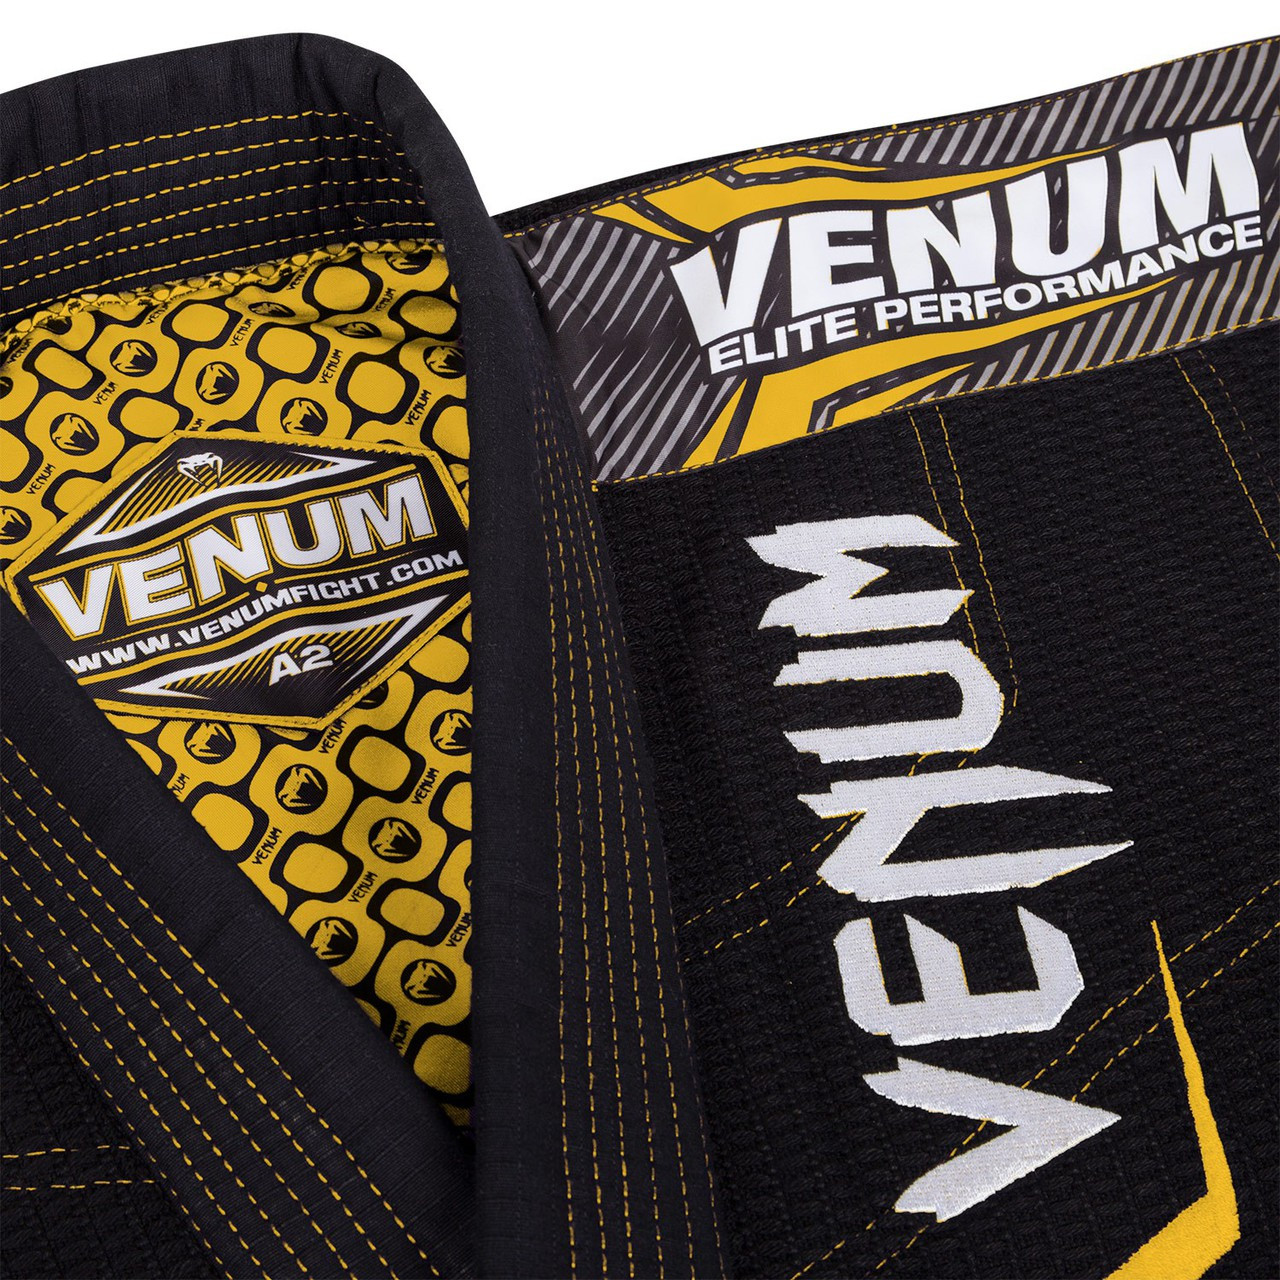 Venum Elite Gi Black and yellow lapel embroidery now available at www.thejiujitsushop.com

Enjoy free shipping from The Jiu Jitsu Shop